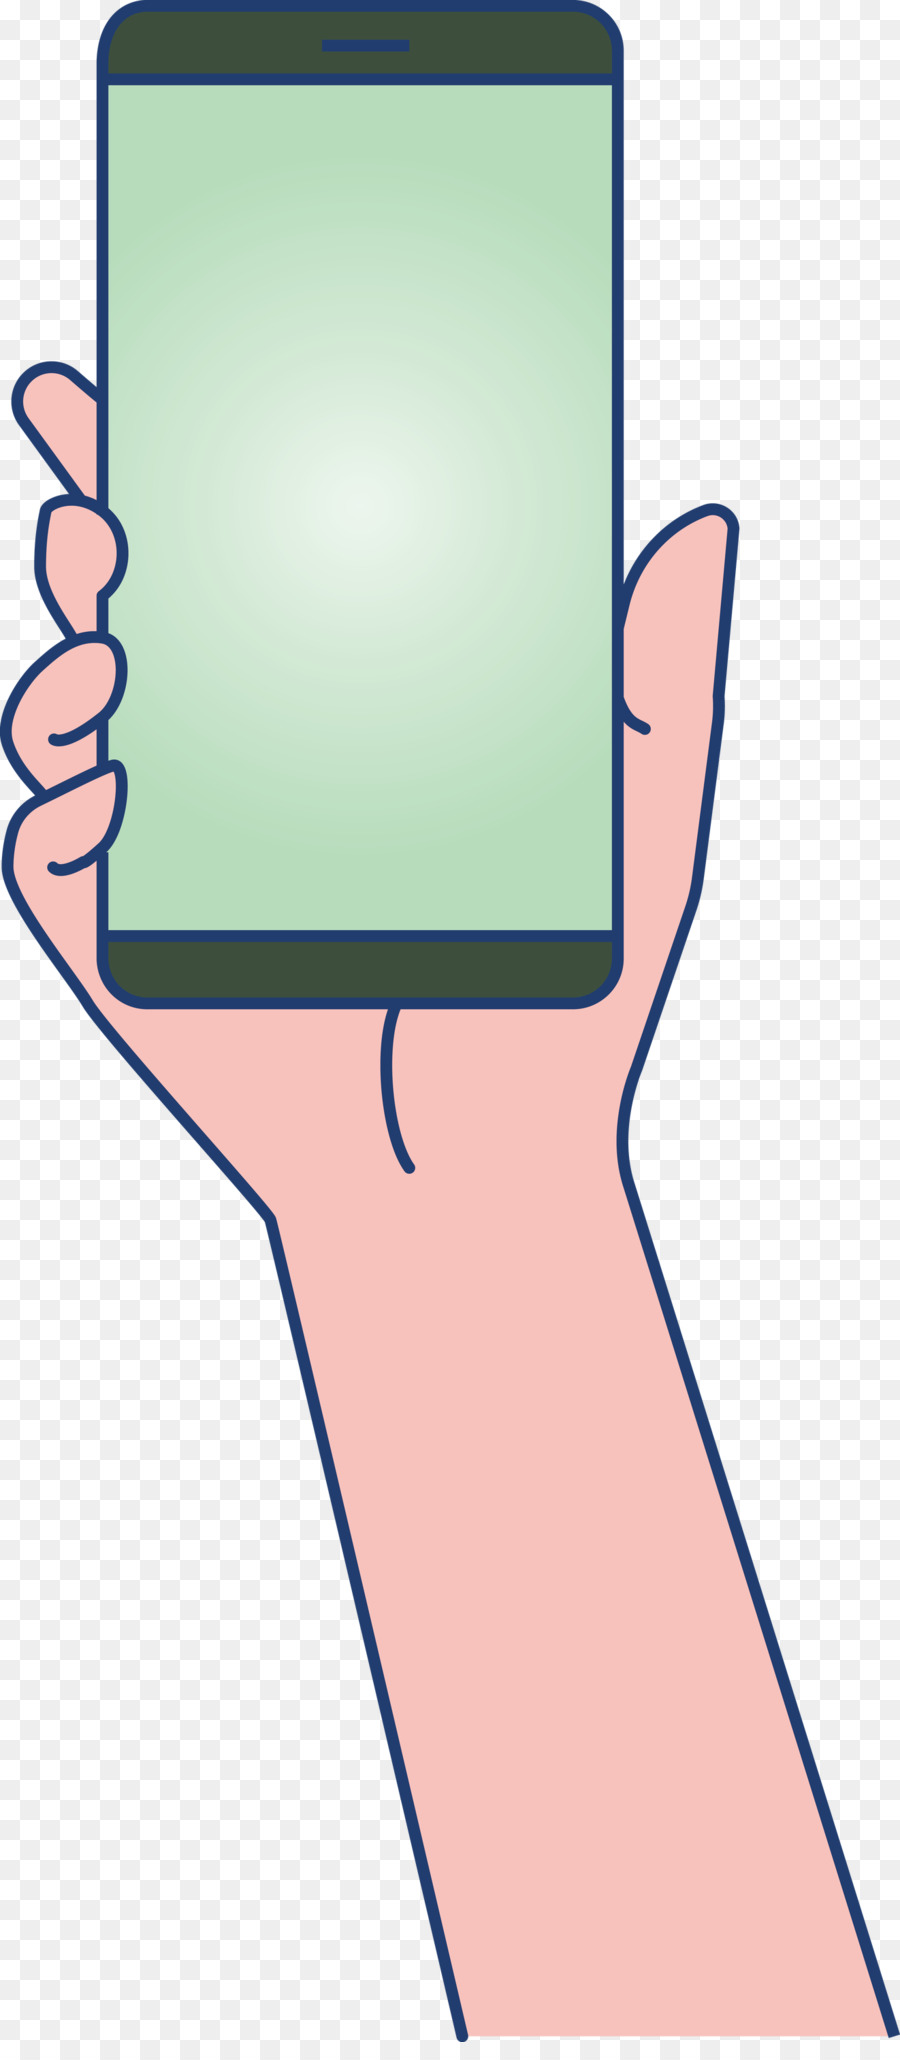 smartphone hand